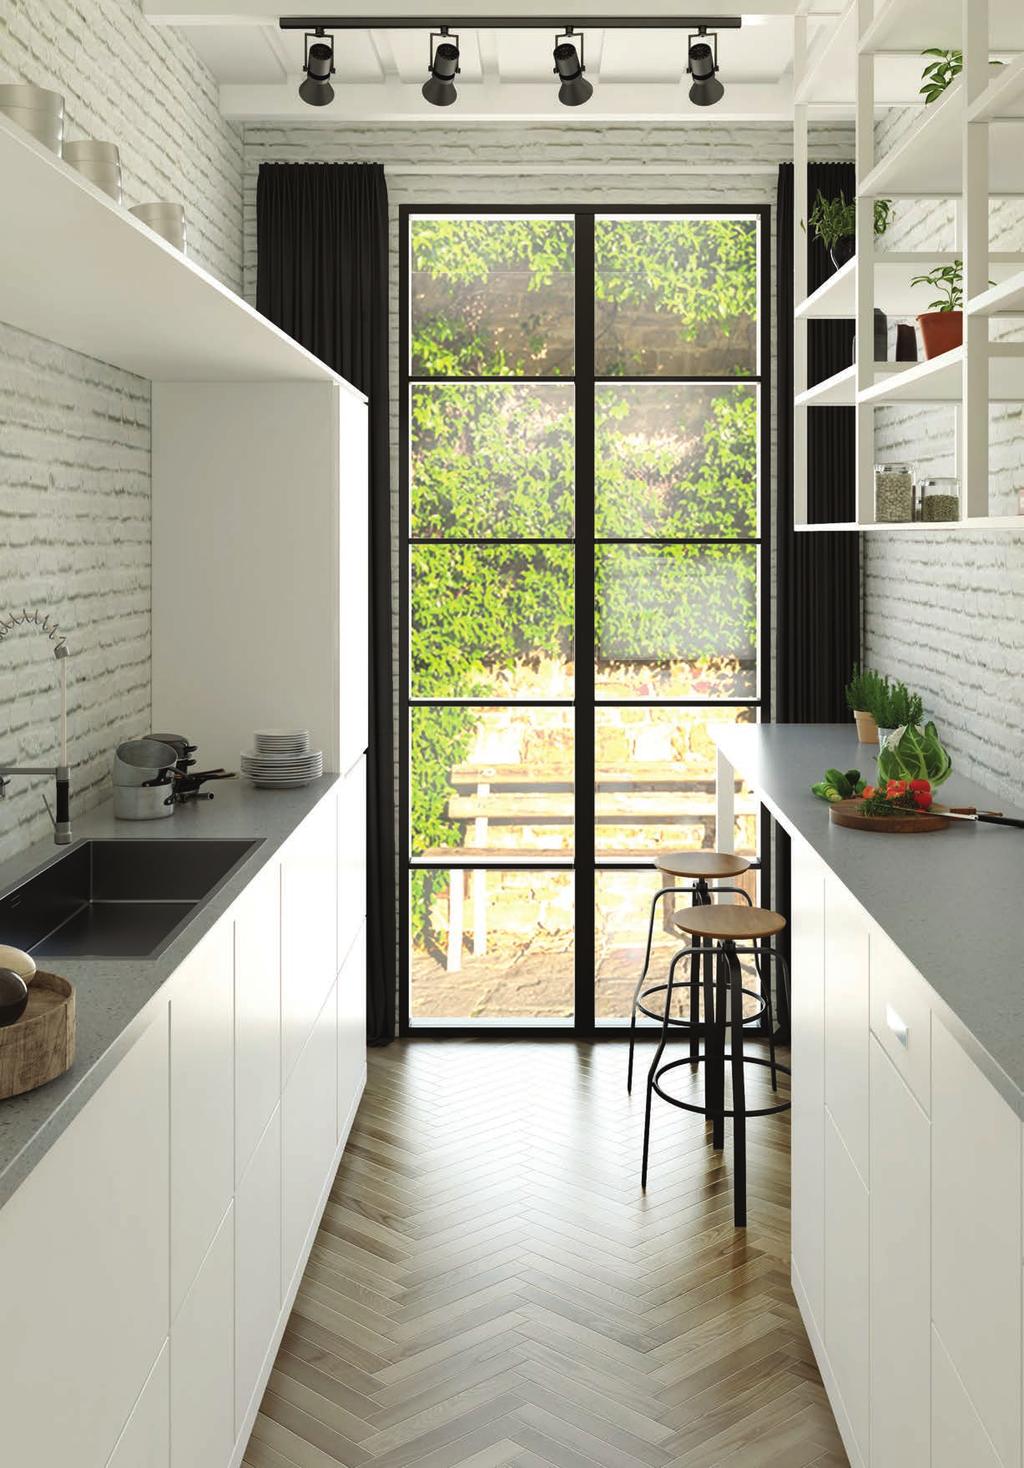 AOVE: Inner Urban Style kitchen features the benchtop in essastone Flint Igneous